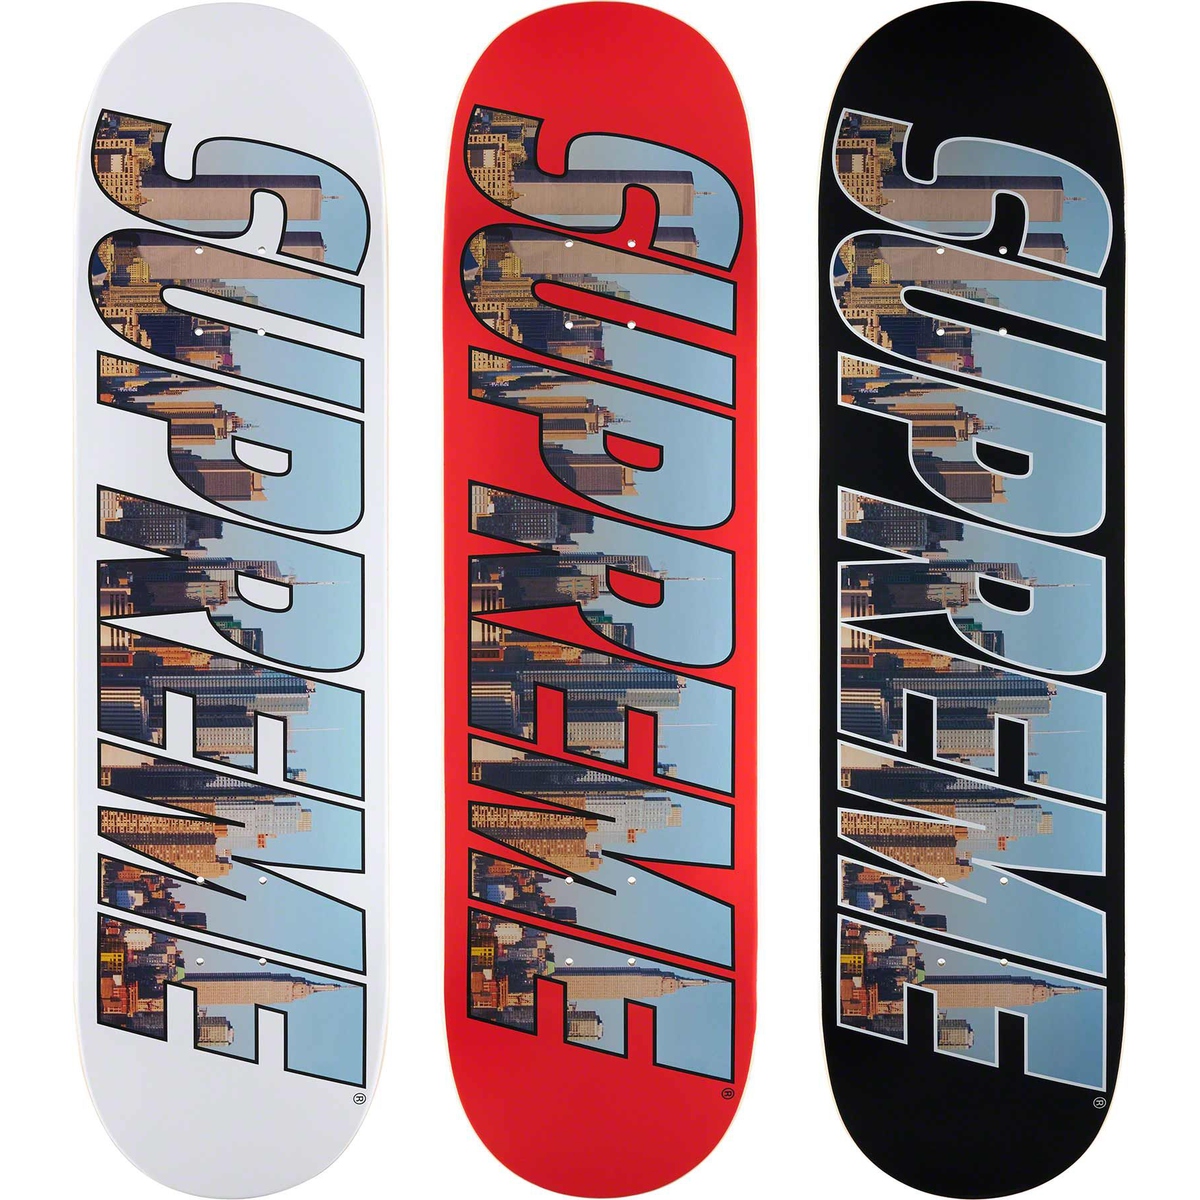 Supreme Gotham Skateboard released during fall winter 23 season